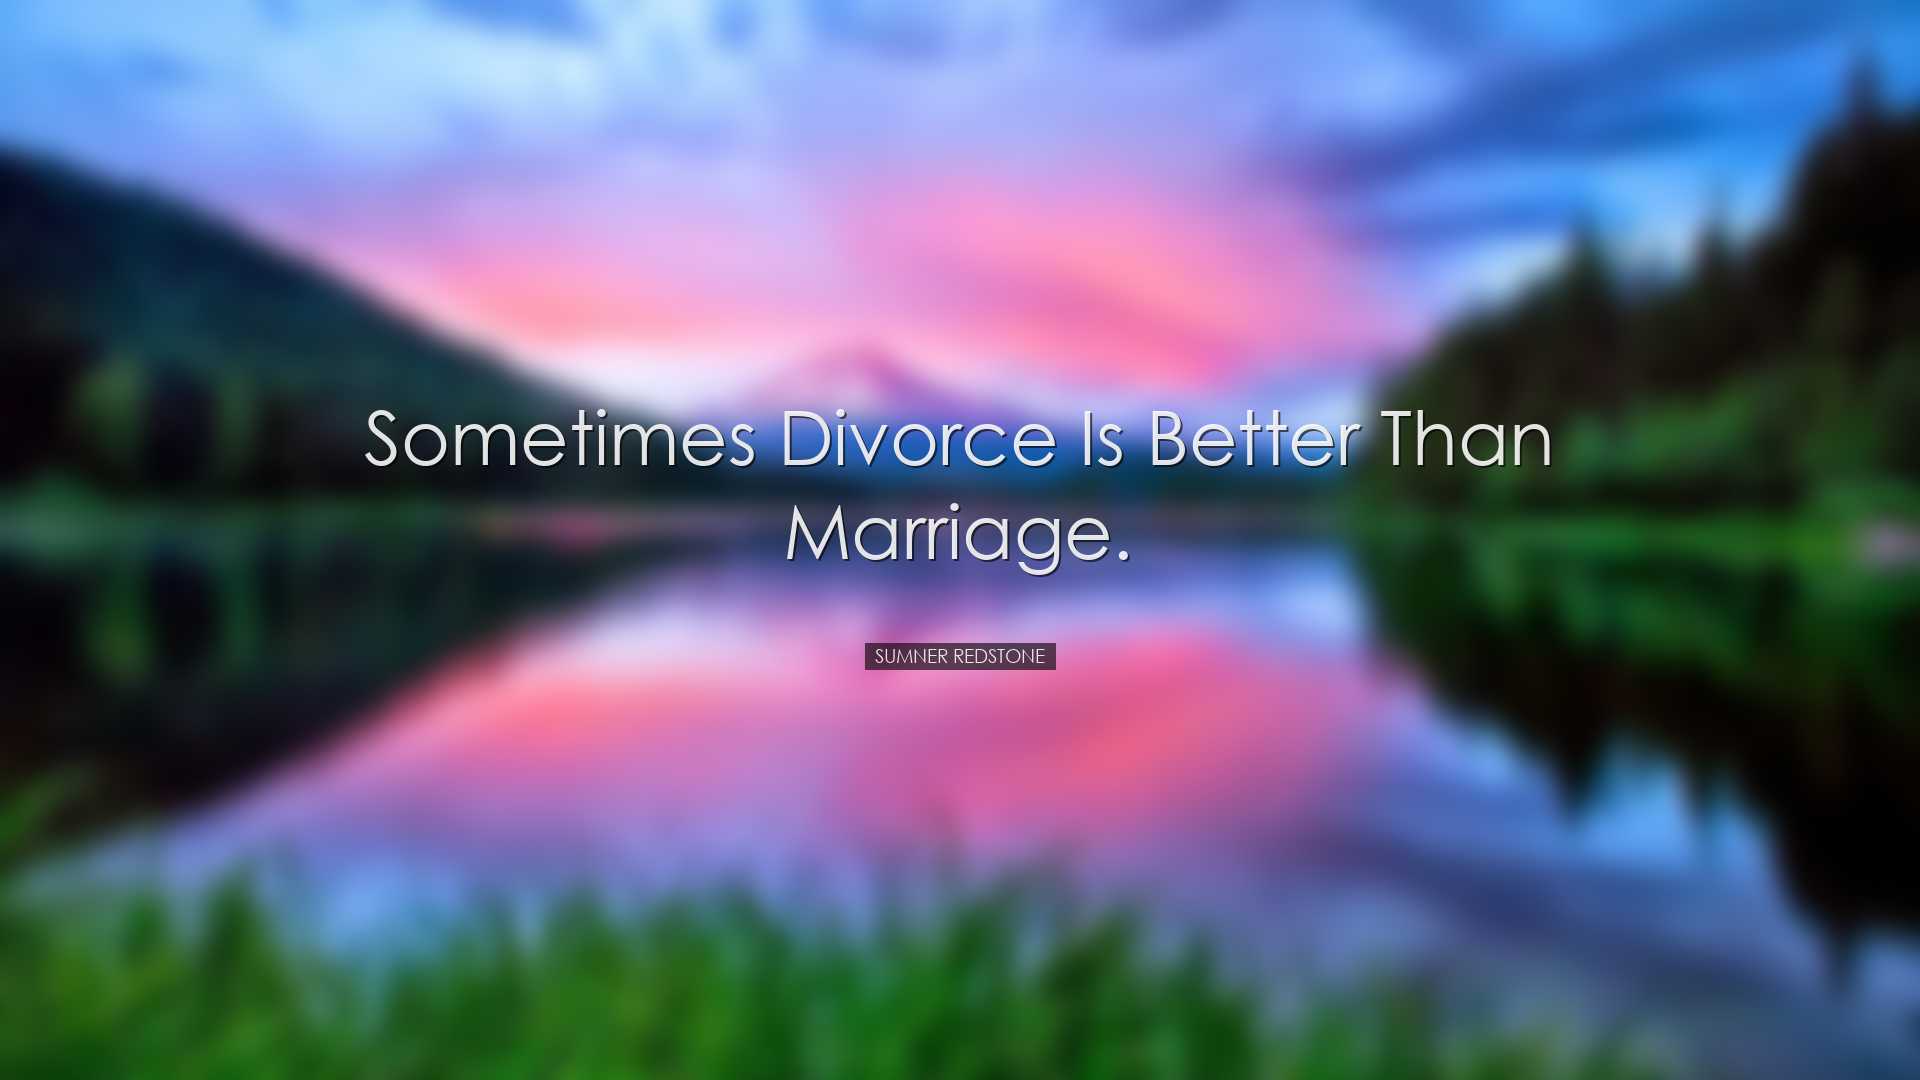 Sometimes divorce is better than marriage. - Sumner Redstone